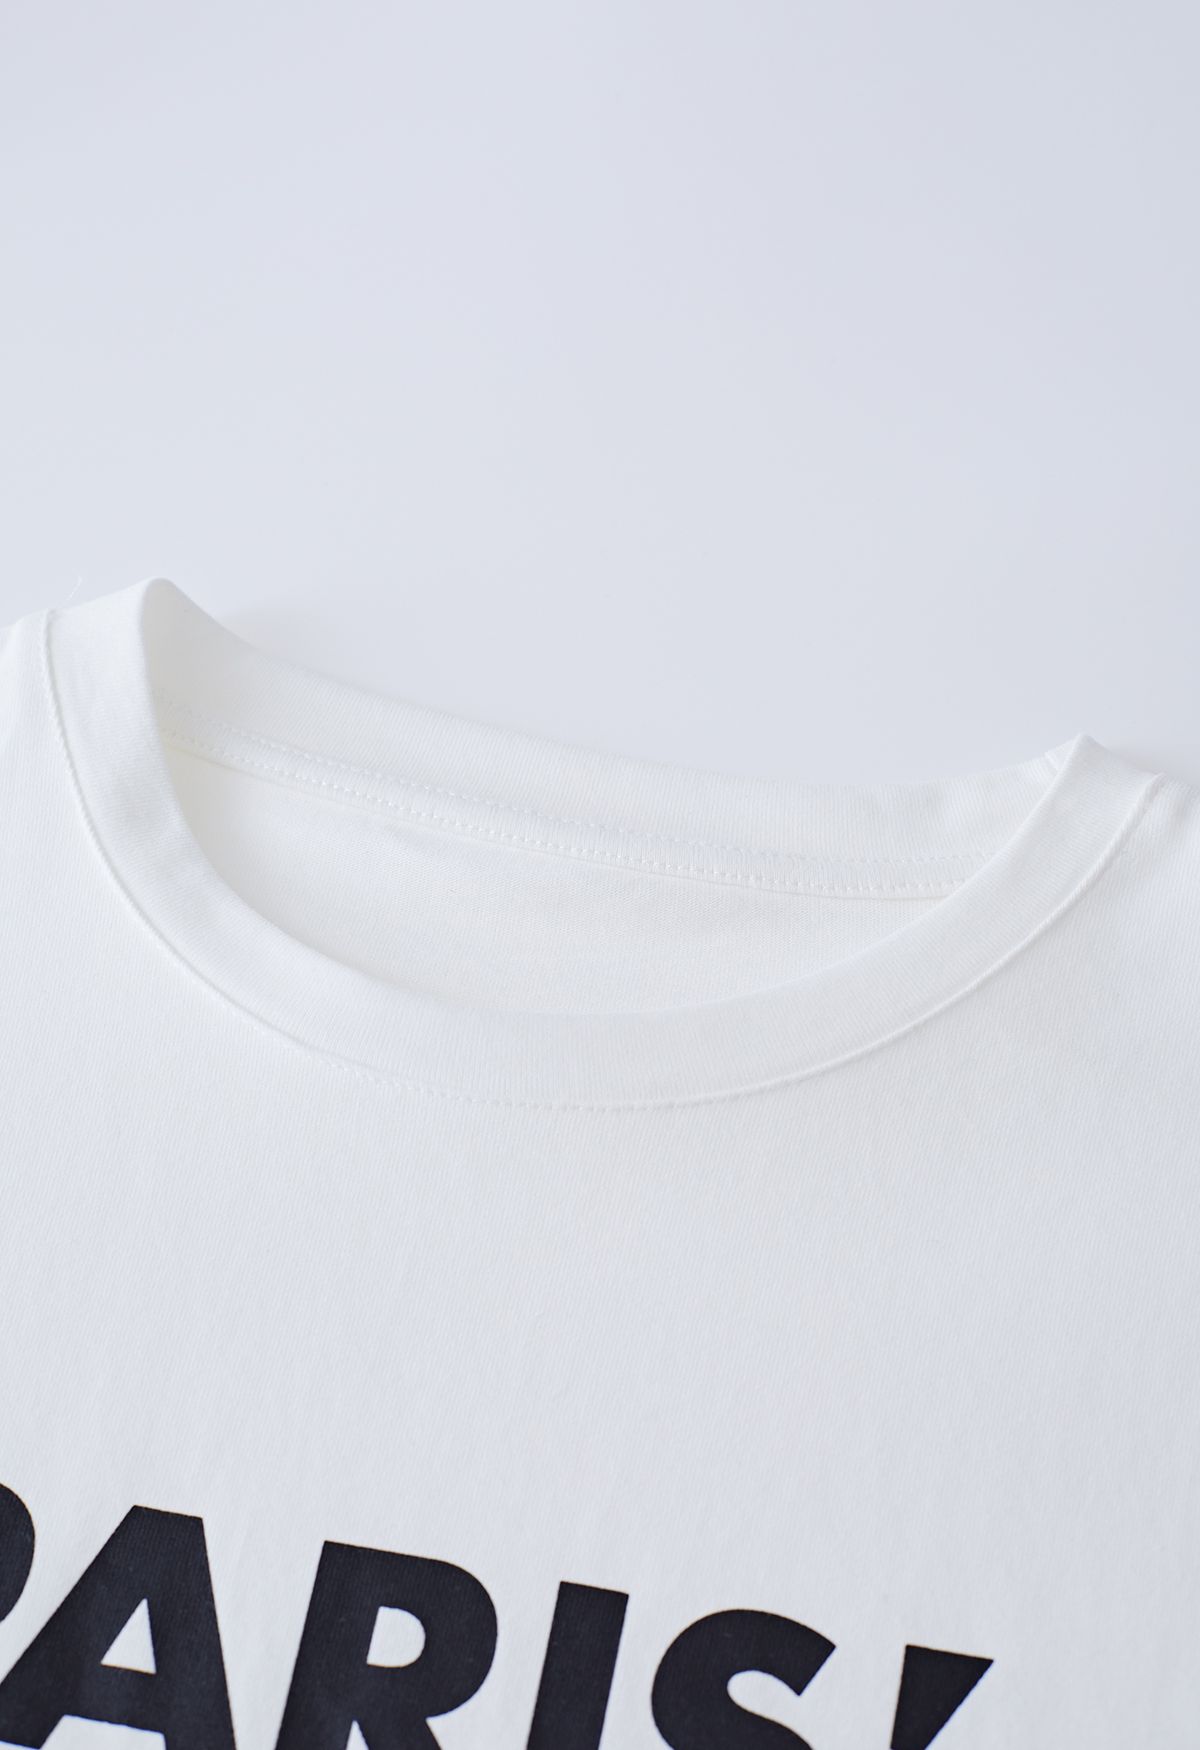 Paris Print Round Neck T-Shirt in White